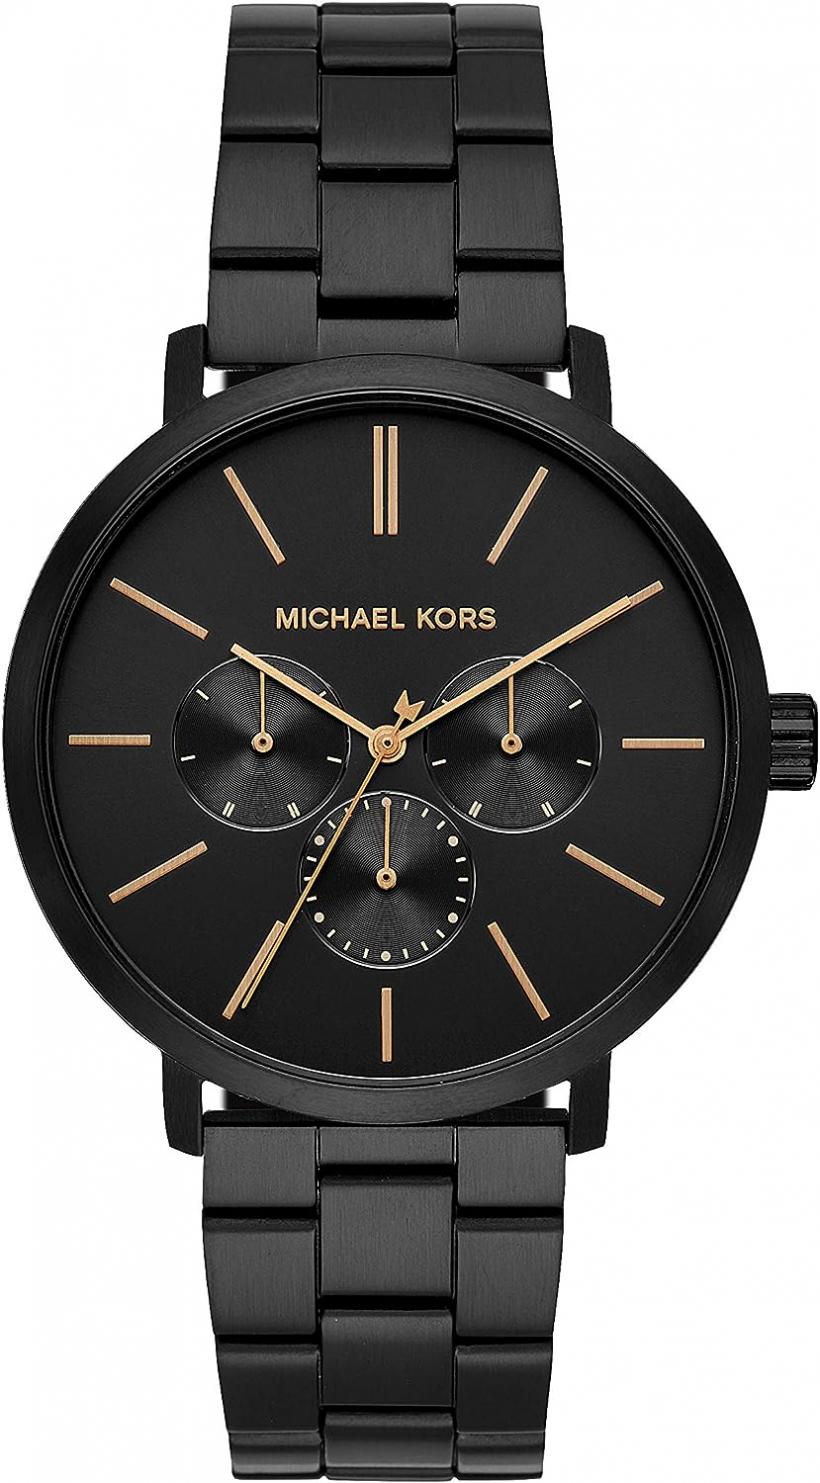 Michael Kors Men's Blake Quartz Watch